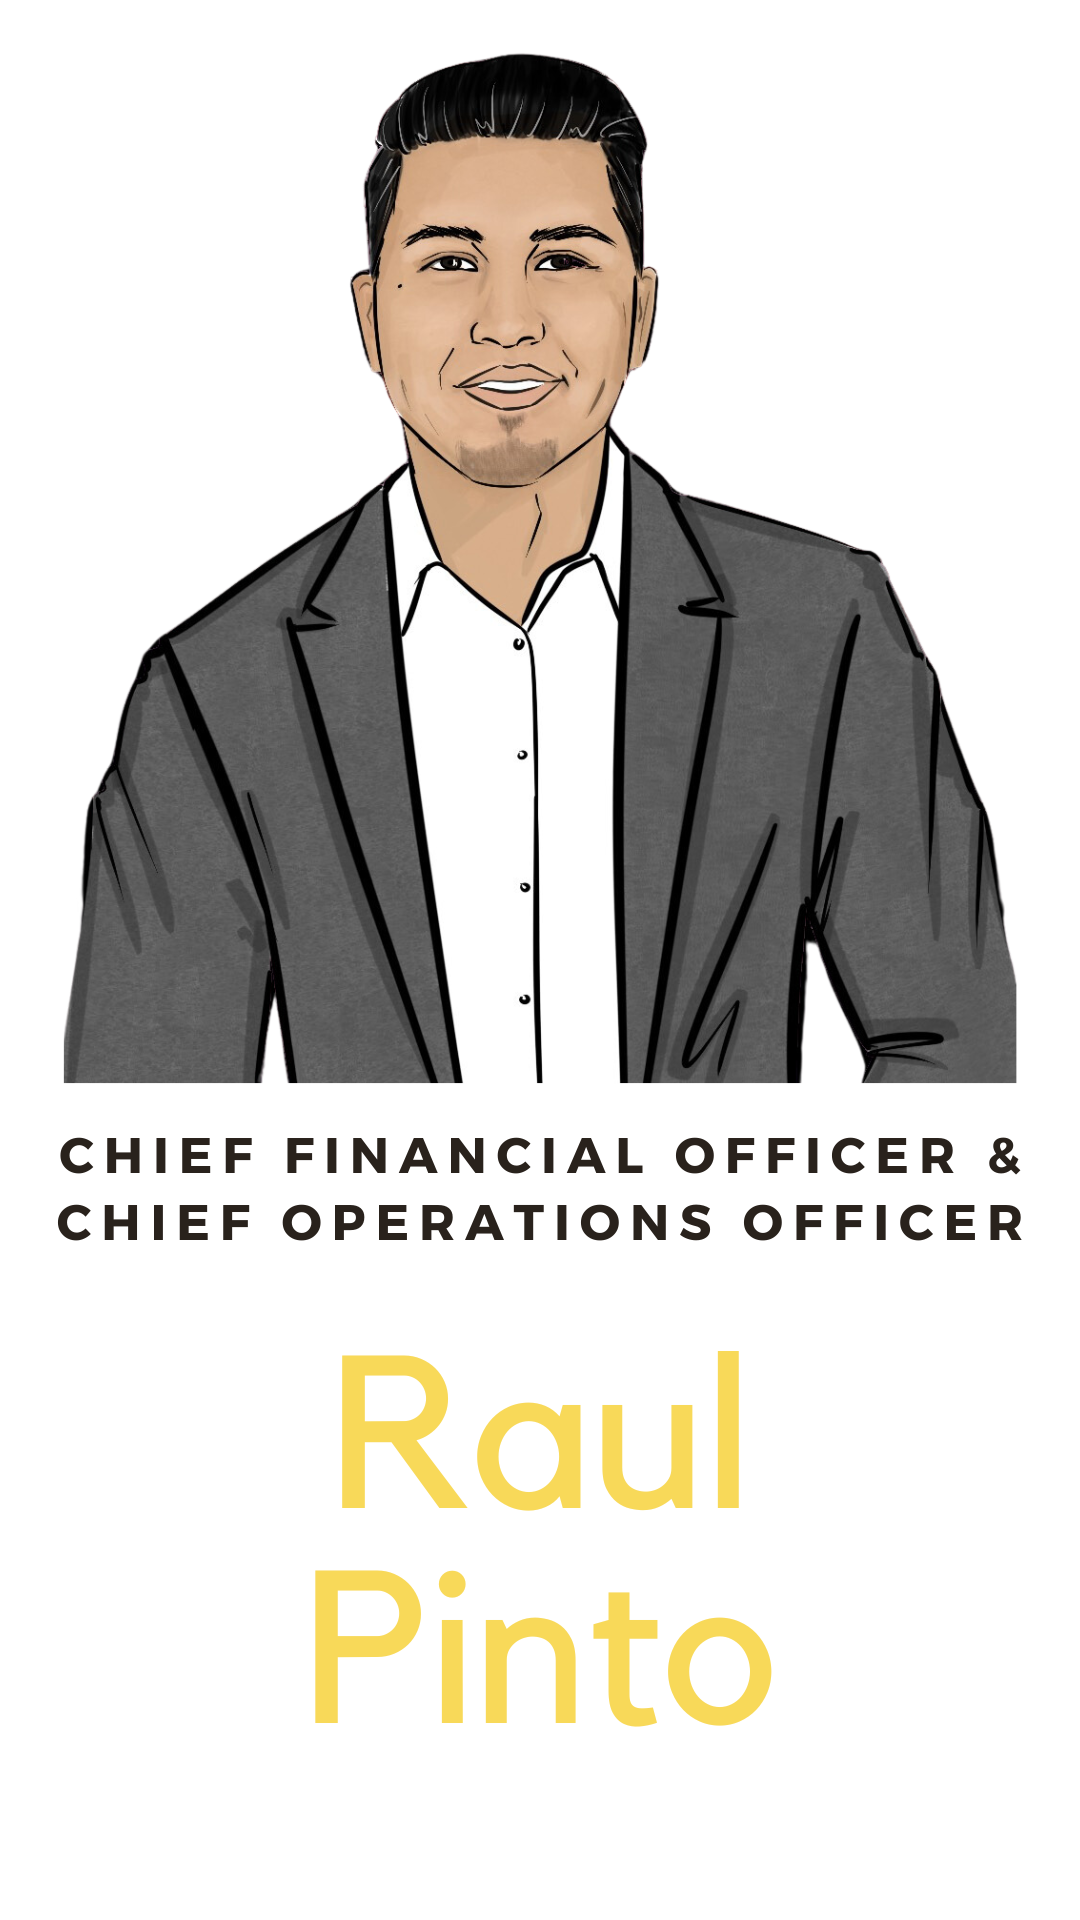 Raul Web Illustration